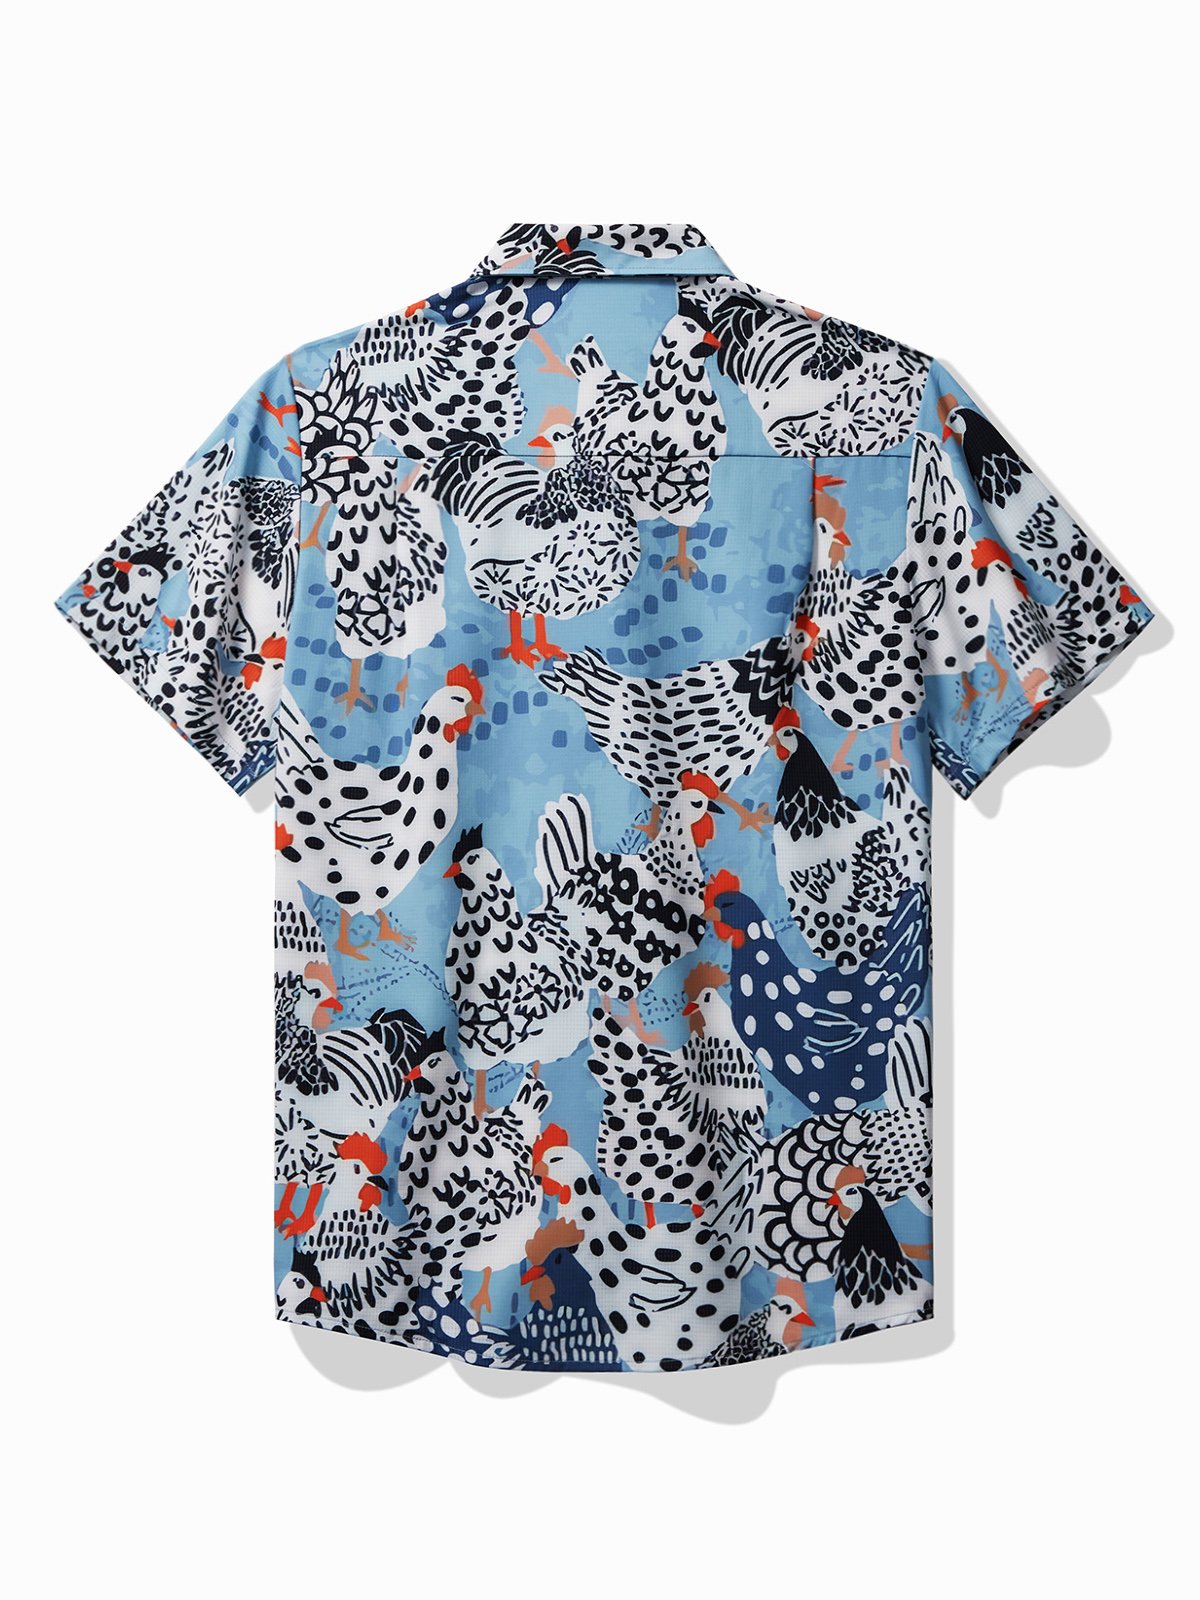 Royaura Rooster Print Cool Ice Shirts Sweat-wicking Beach Men's Hawaiian Oversized Pocket Shirt